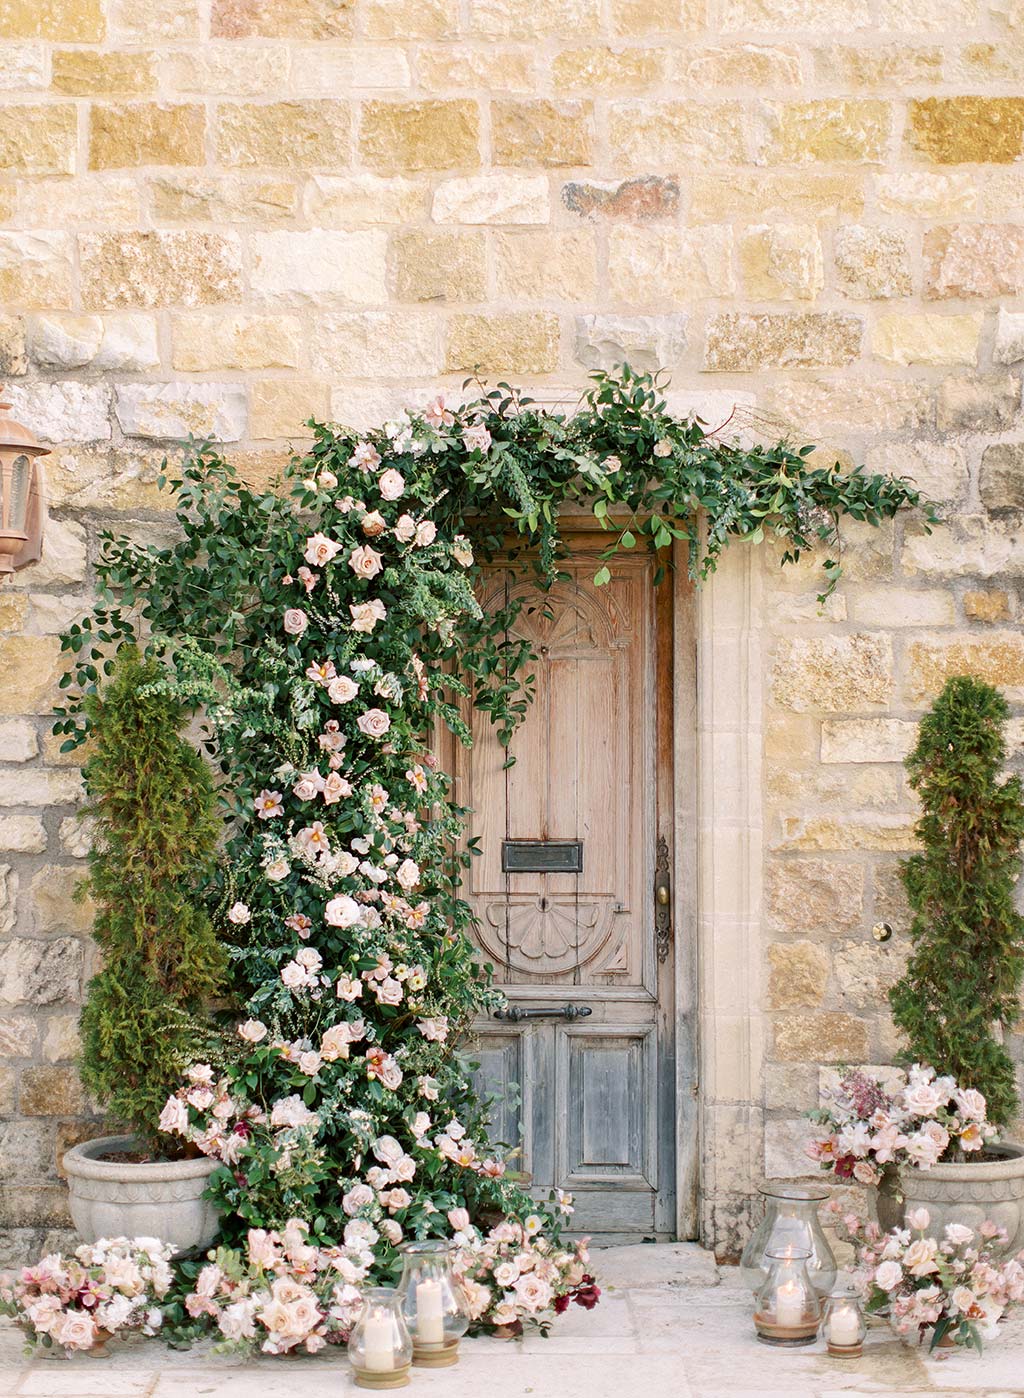 Sunstone Winery Wedding Venue Floral Arrangement on doorway